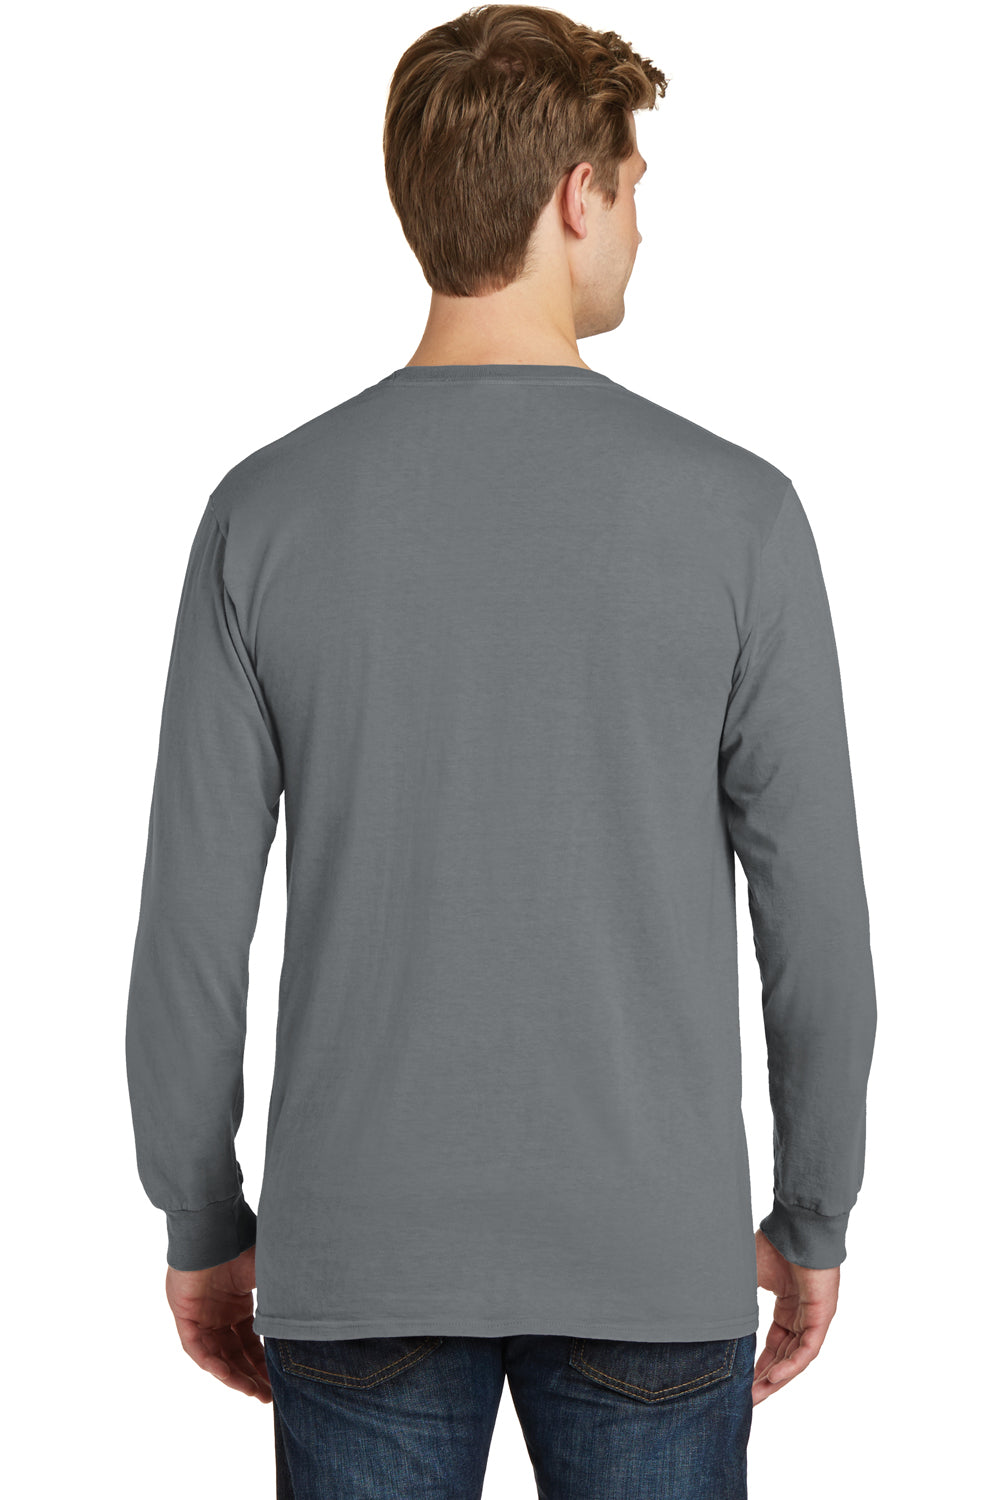 Port & Company PC099LSP Mens Beach Wash Long Sleeve Crewneck T-Shirt w/ Pocket Pewter Grey Back